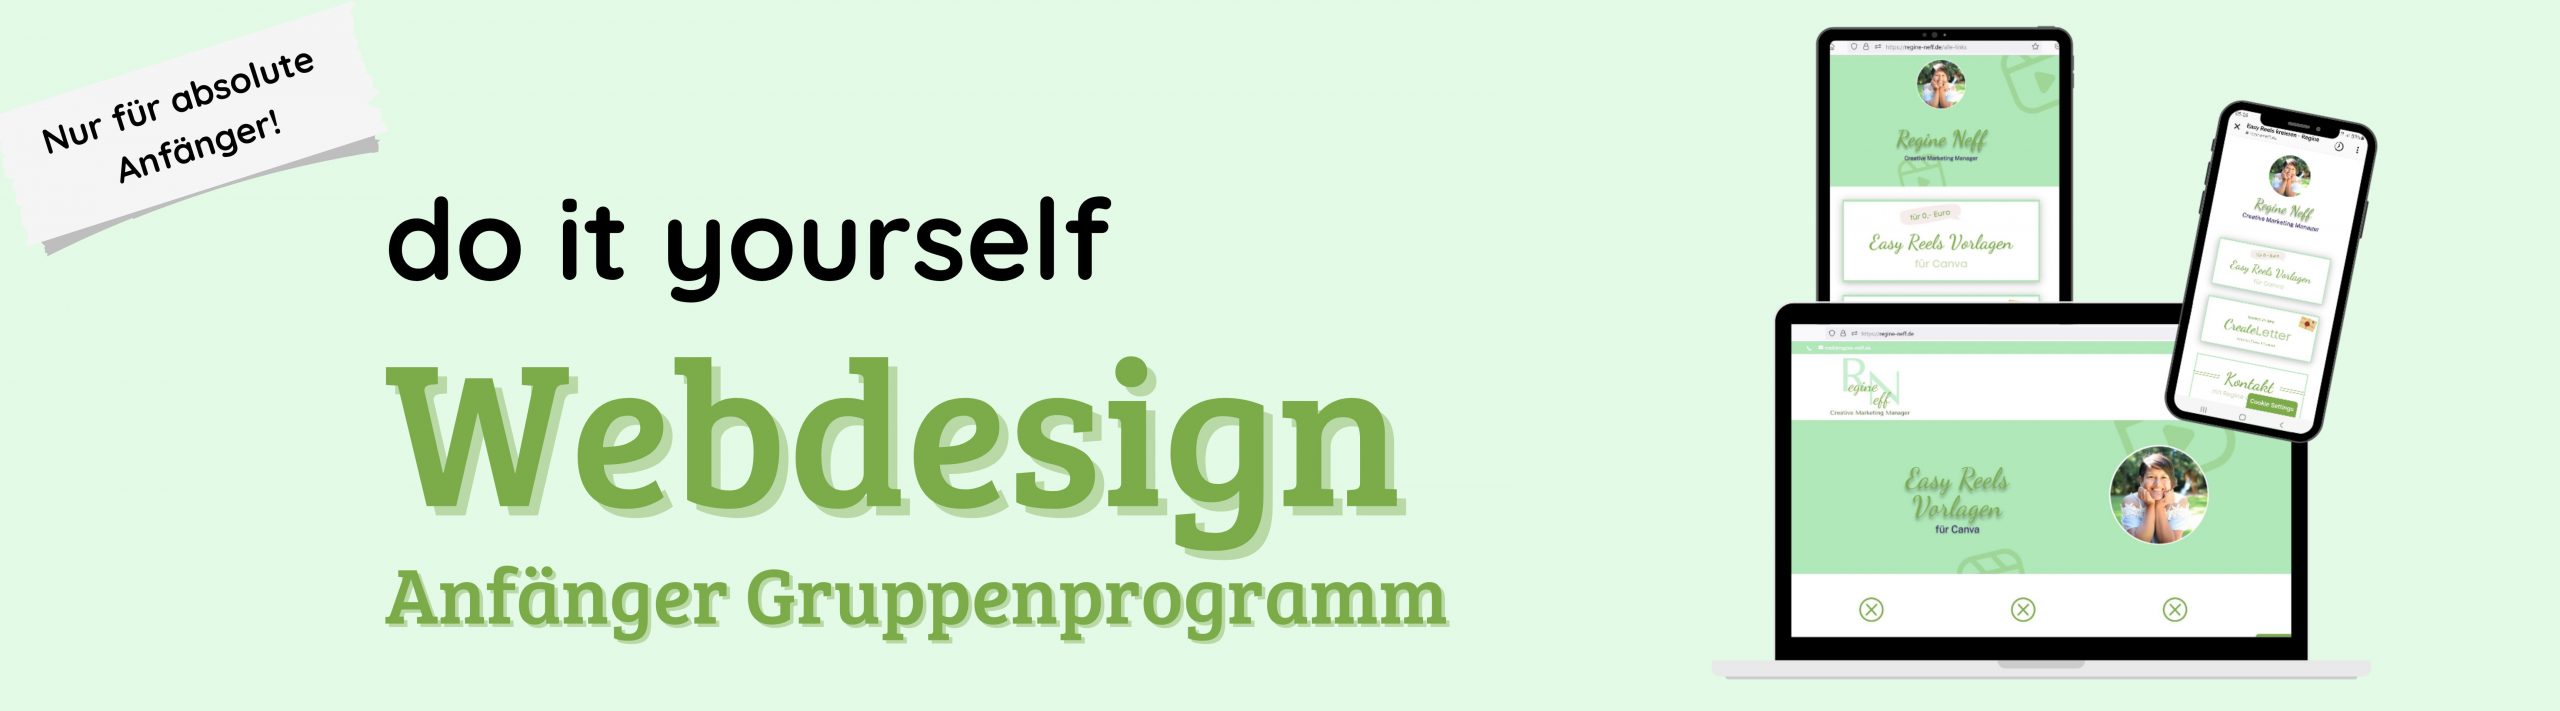 Webdesign Kurs Onlinekurs Linkpage